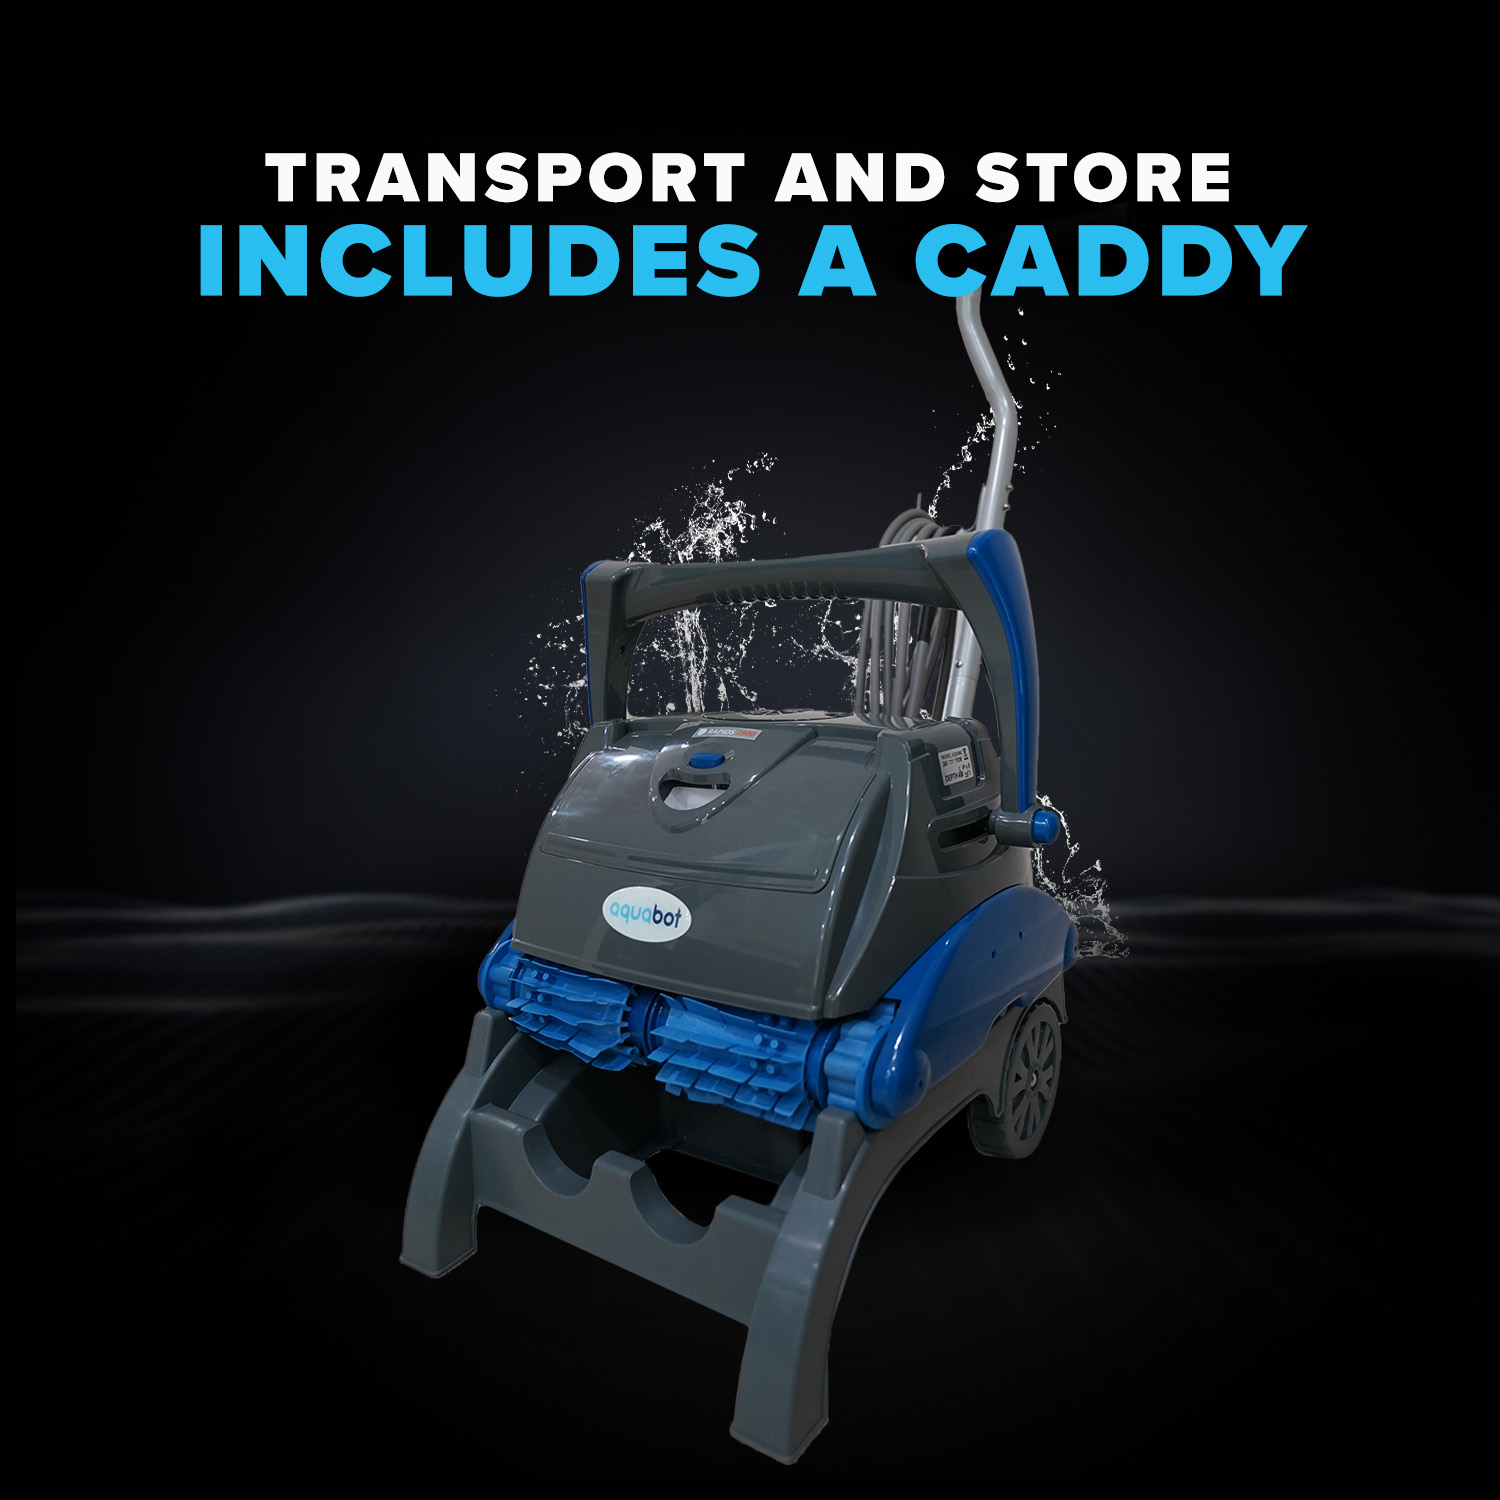 Aquabot Caddy Included